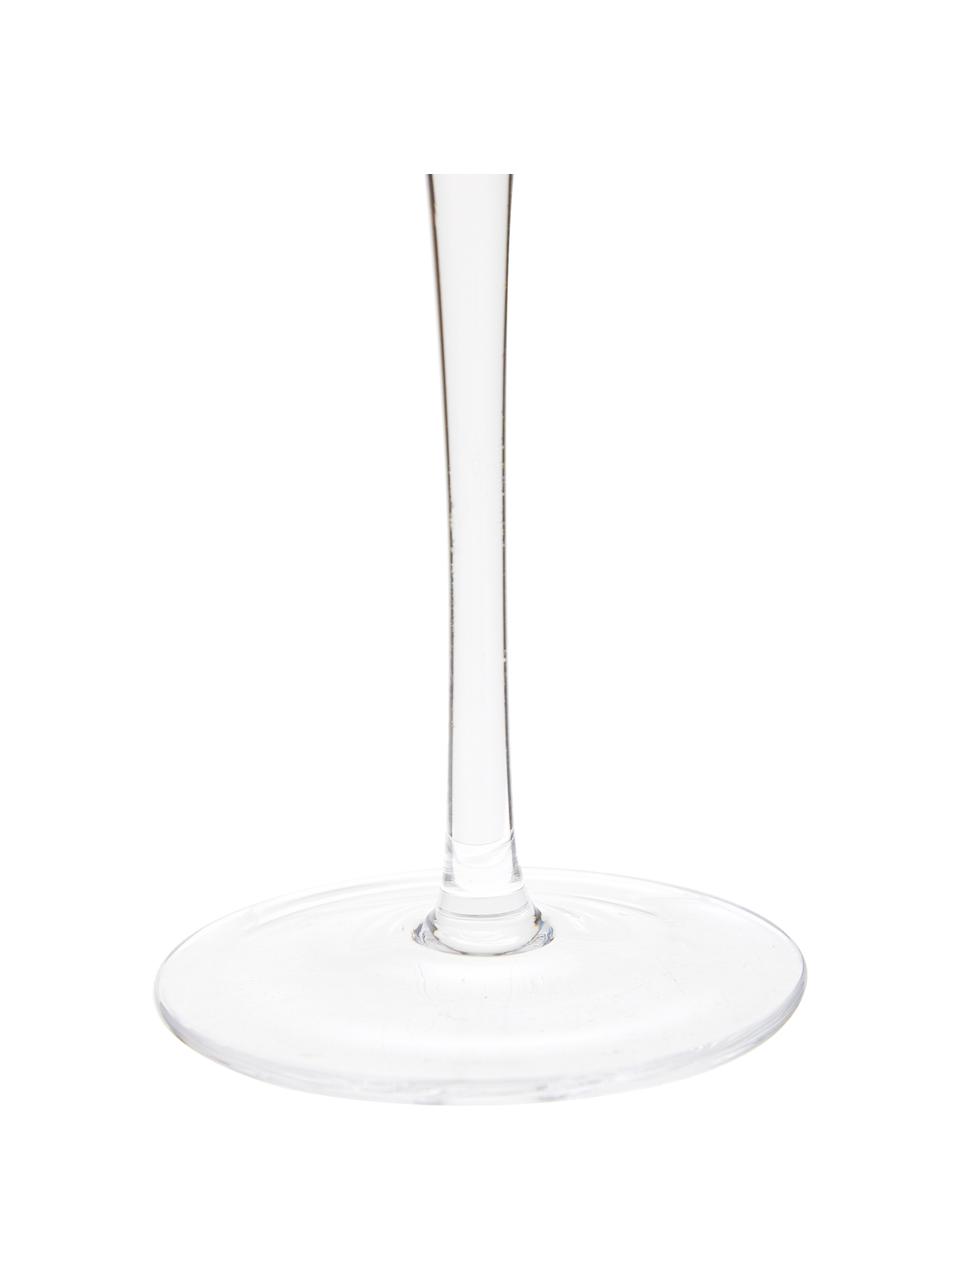 Bicchiere vino bianco in vetro soffiato Ays 4 pz, Vetro, Trasparente, Ø 6 x Alt. 24 cm, 418 ml